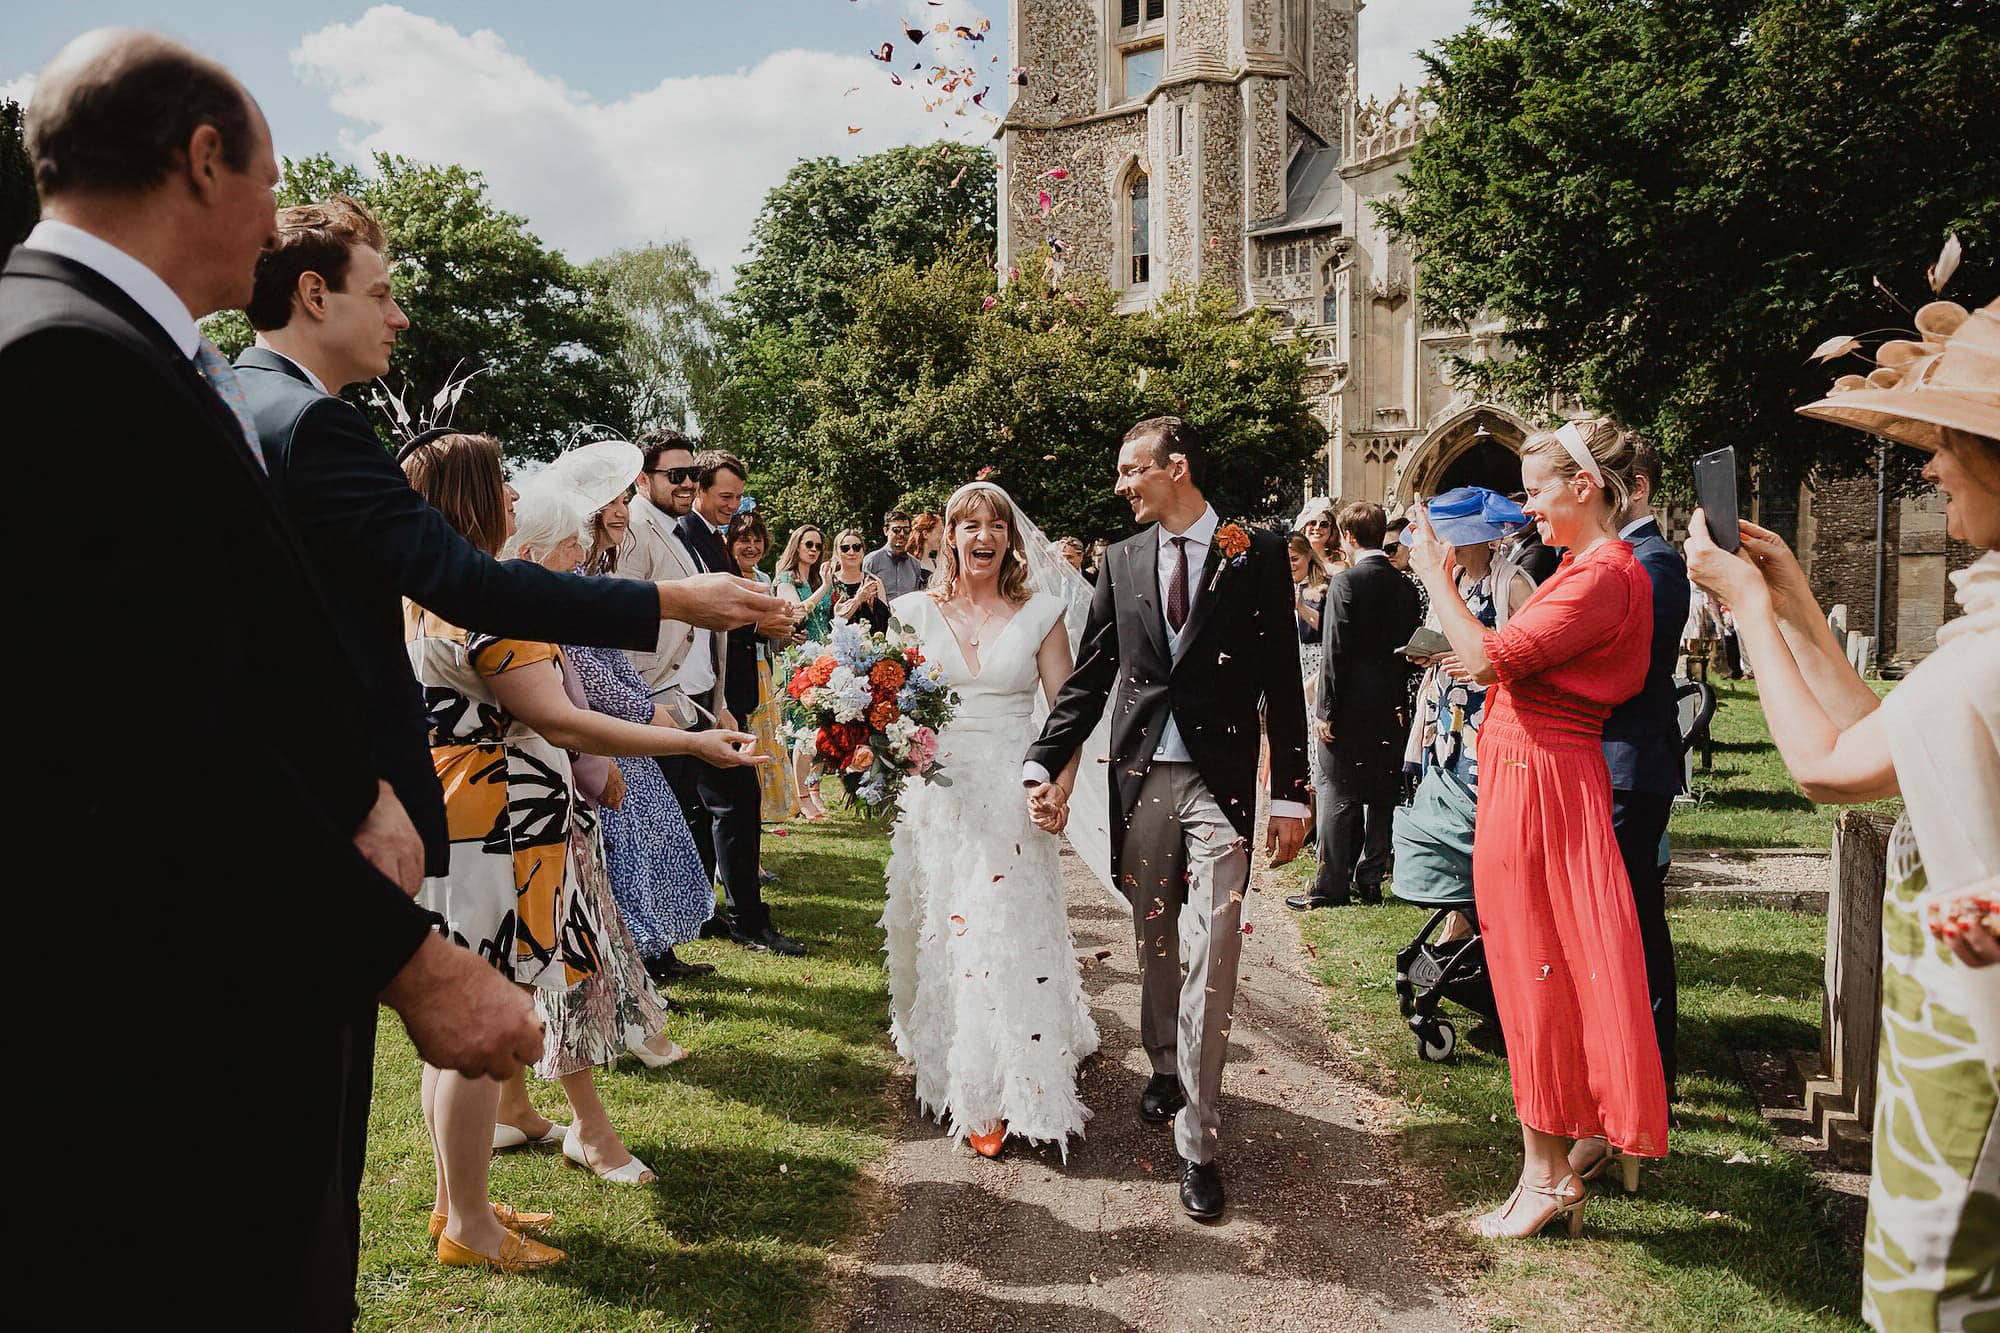 confetti being thrown outside suffolk church as bride and groom walk through it